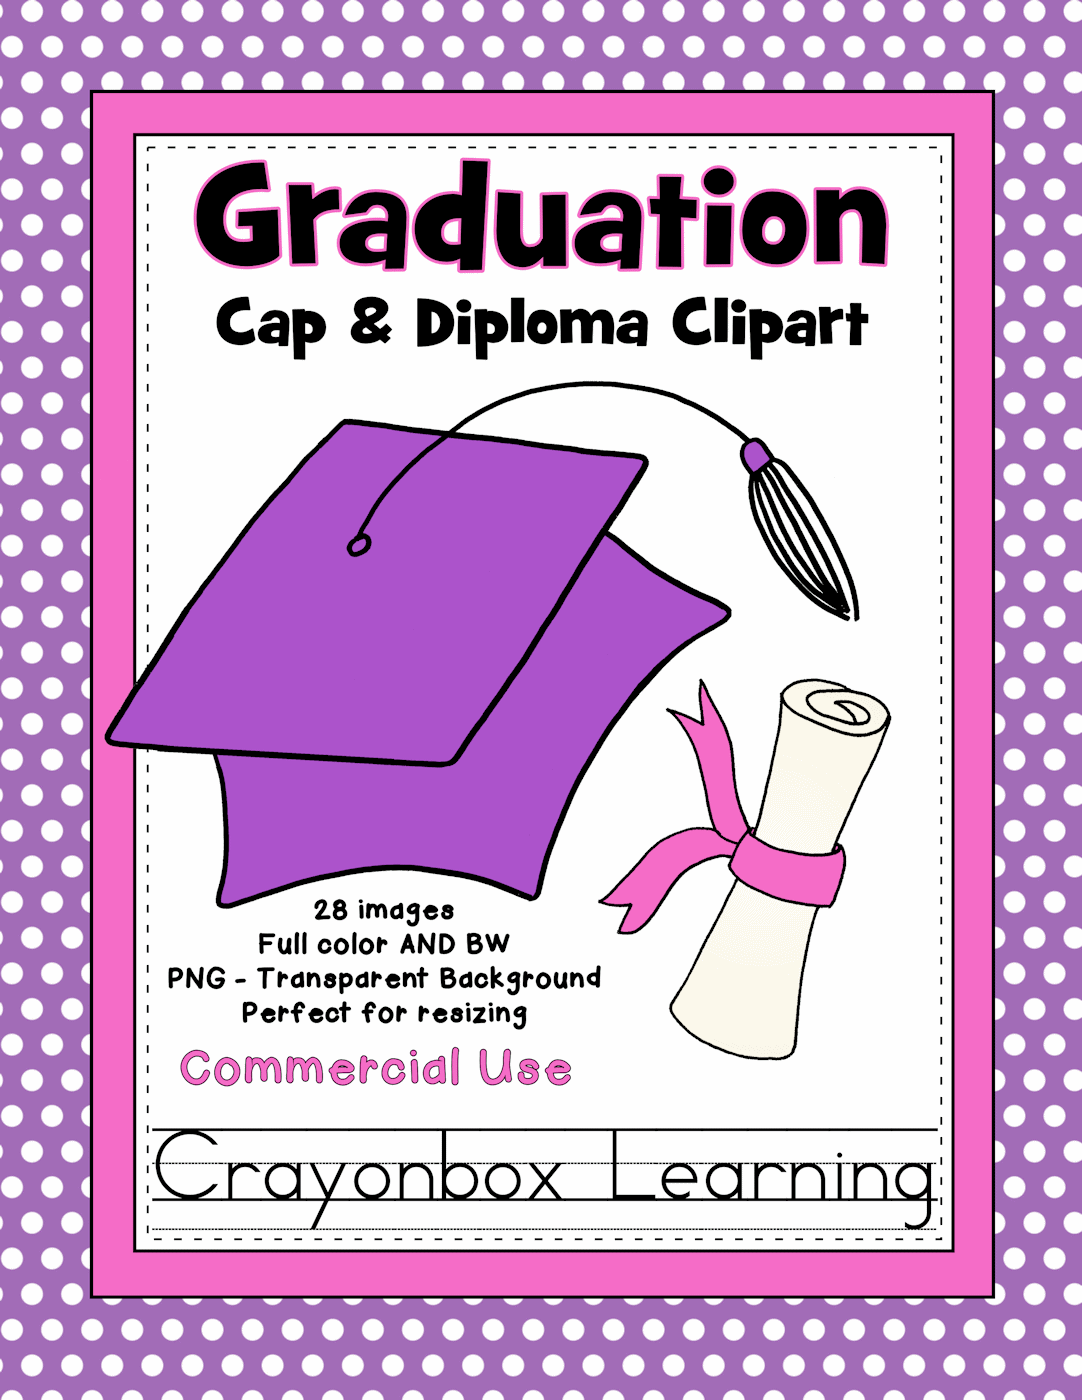 Graduation Clipart   Caps   Diplomas   Commercial Use